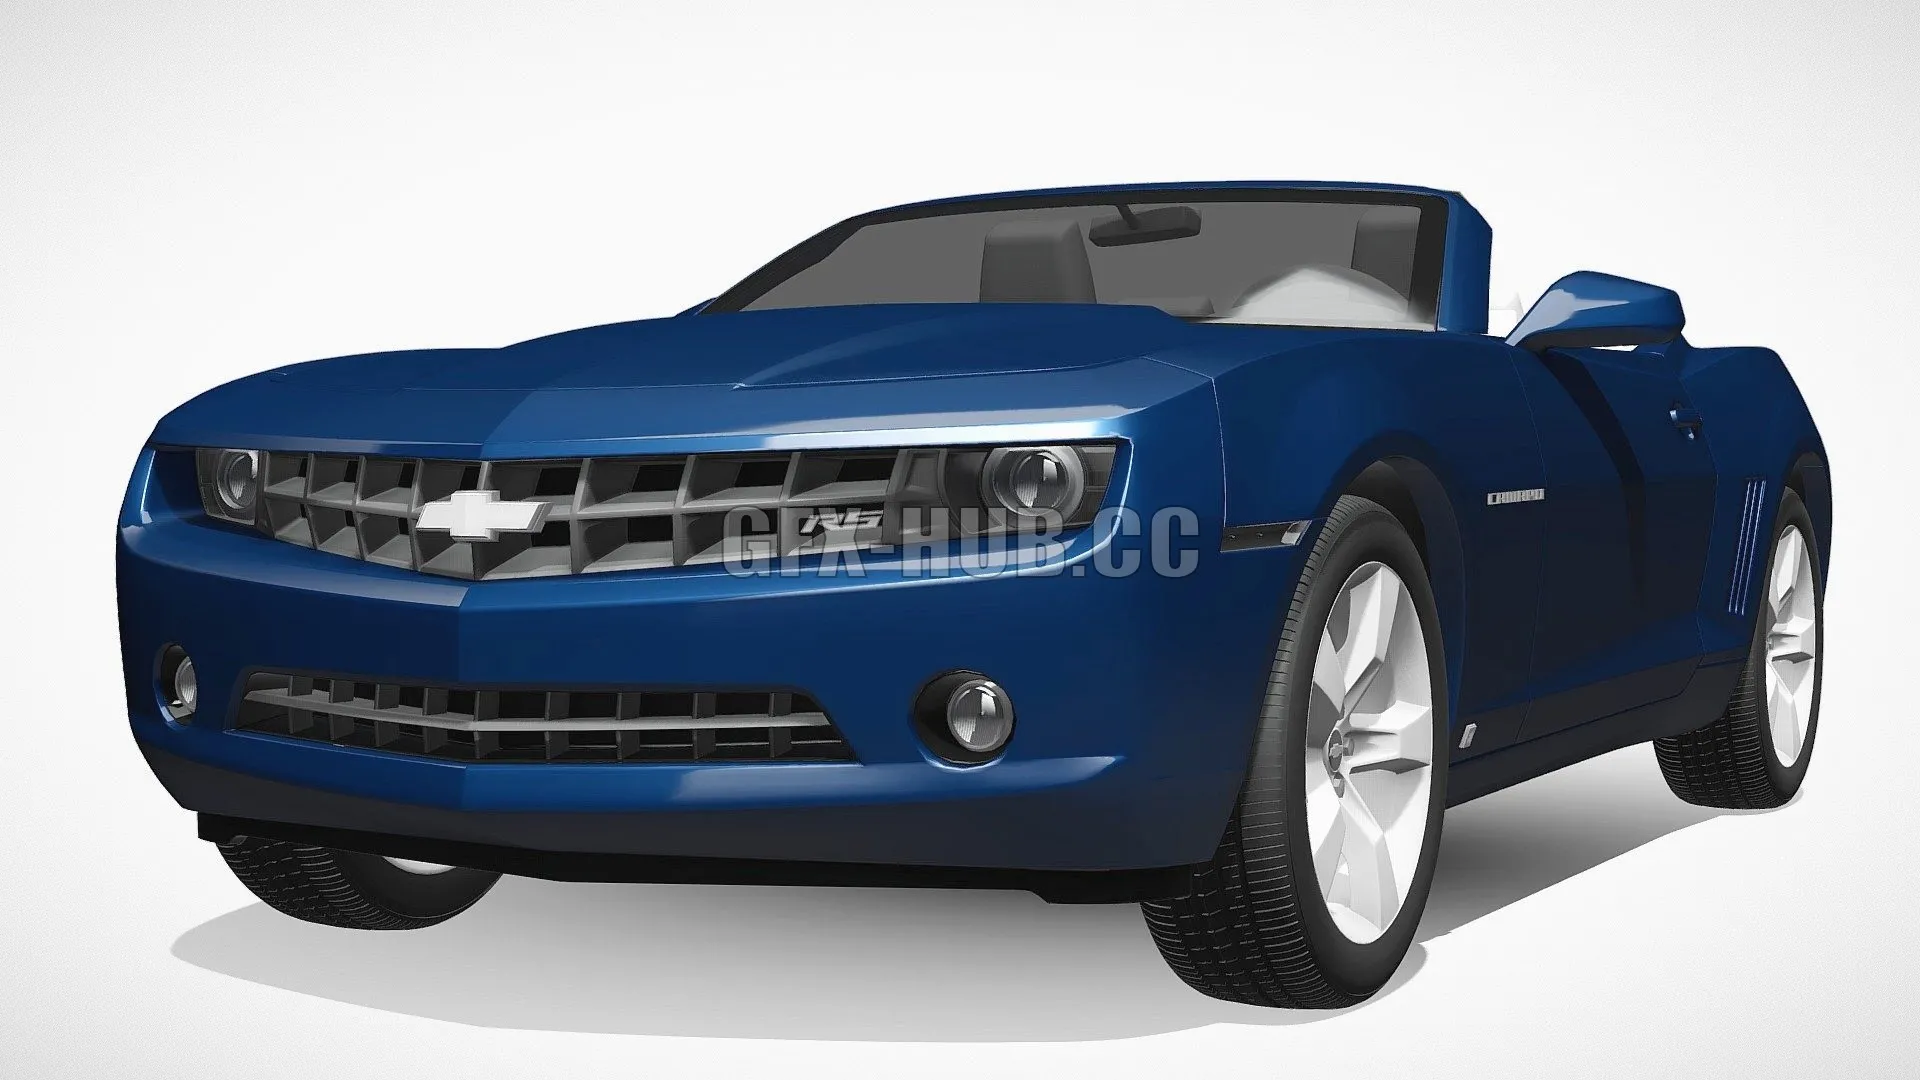 CAR – Chevrolet Camaro Convertible 2011 (Blender) 3D Model